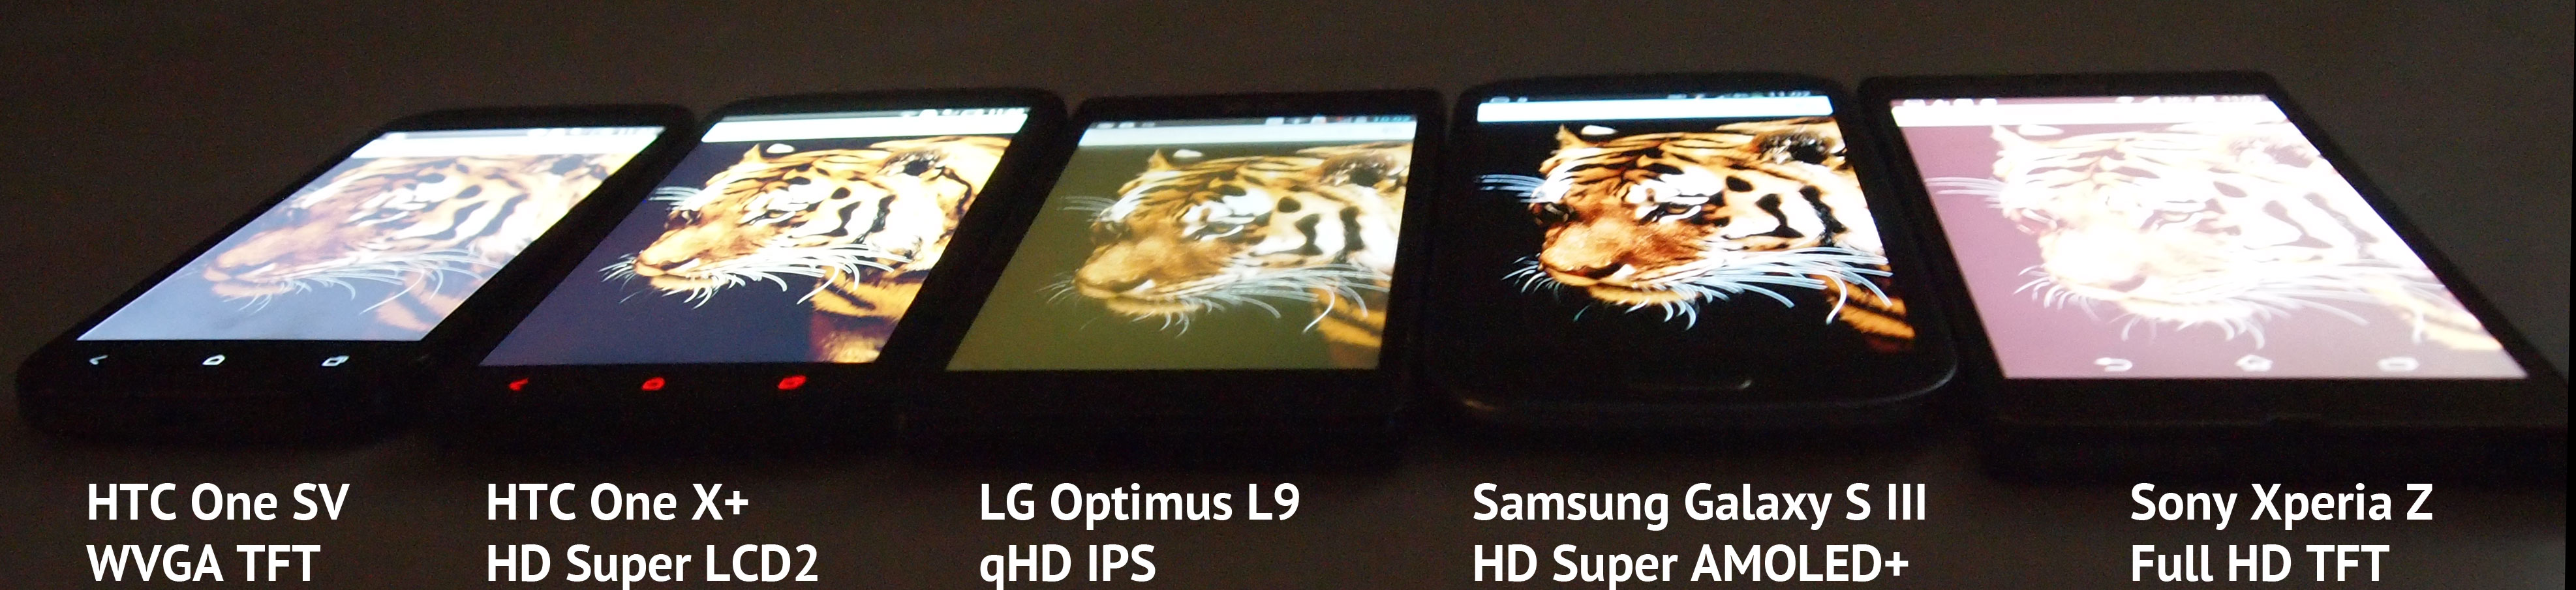 Sony-Xperia-Z-screen-comparison-more-camera-samples-emerge-1.jpg